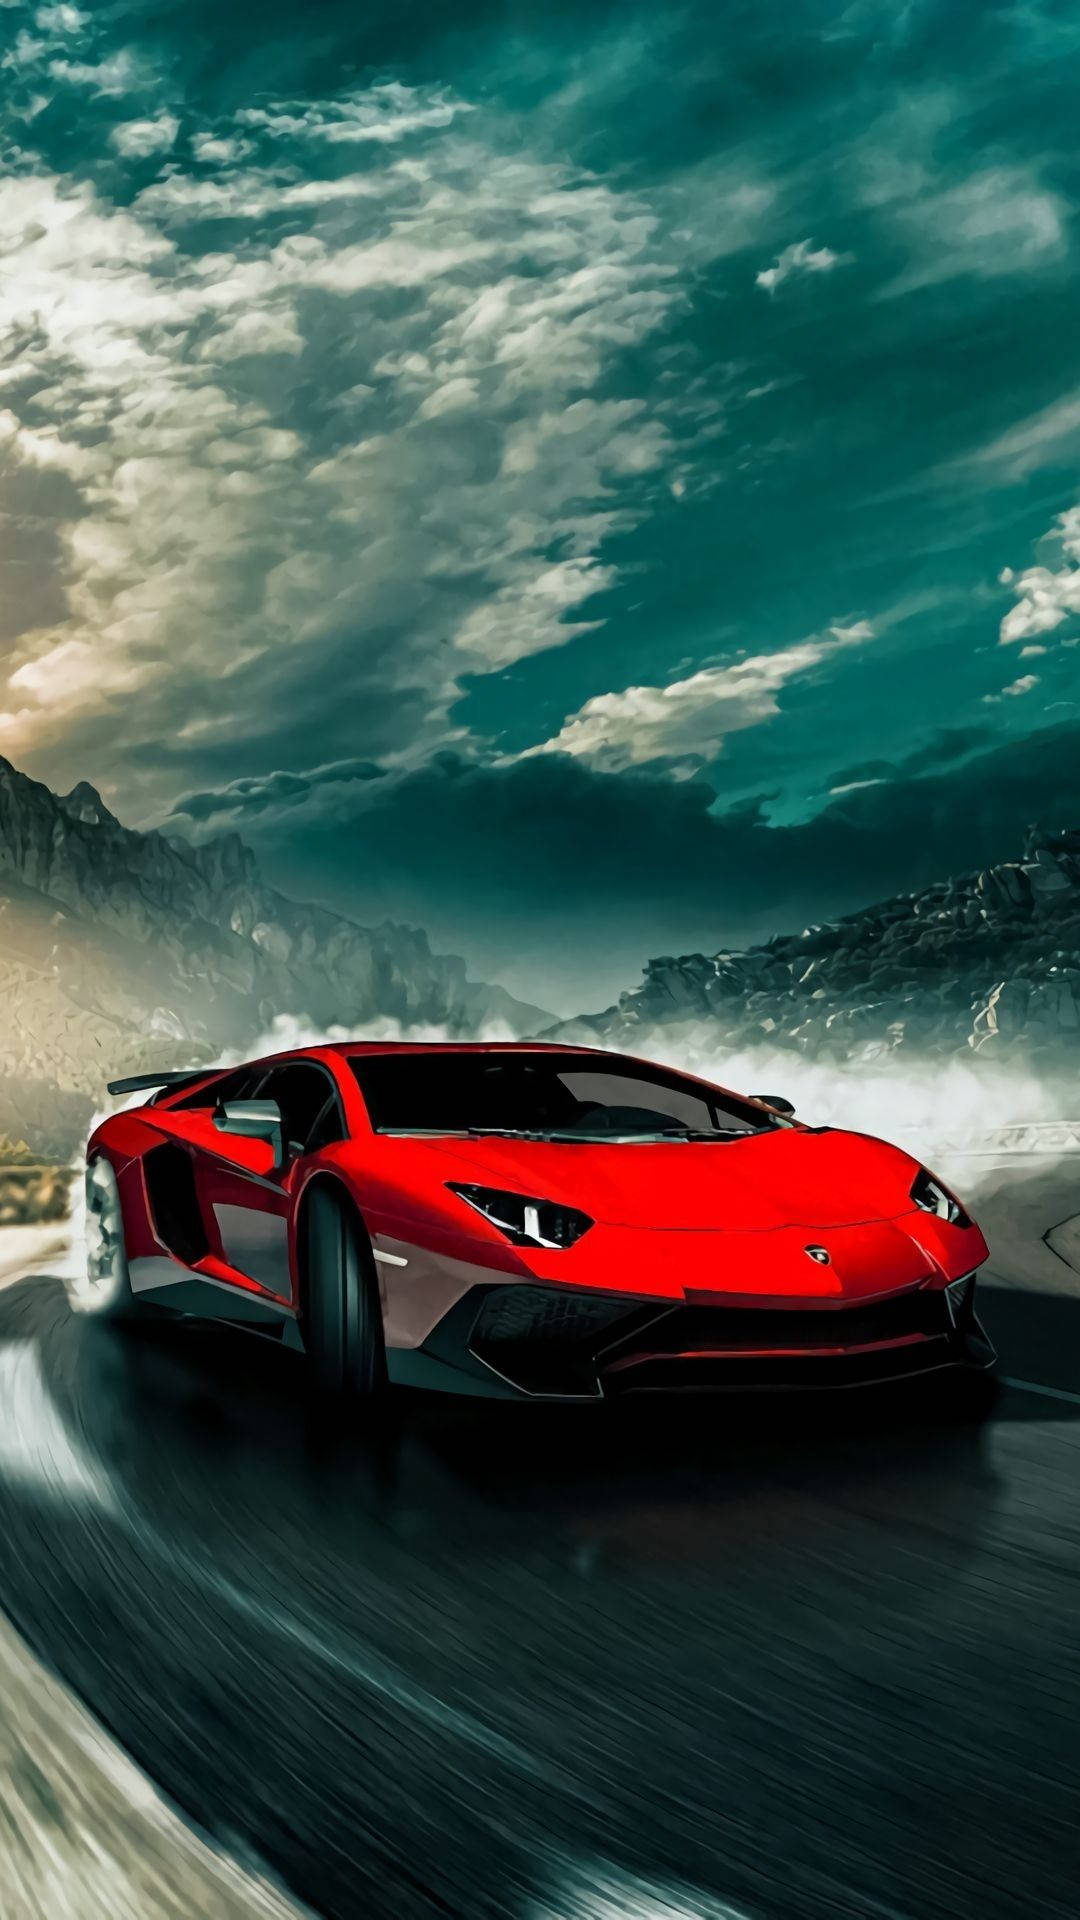 Red Lamborghini Aventador - Unleashing Power And Luxury